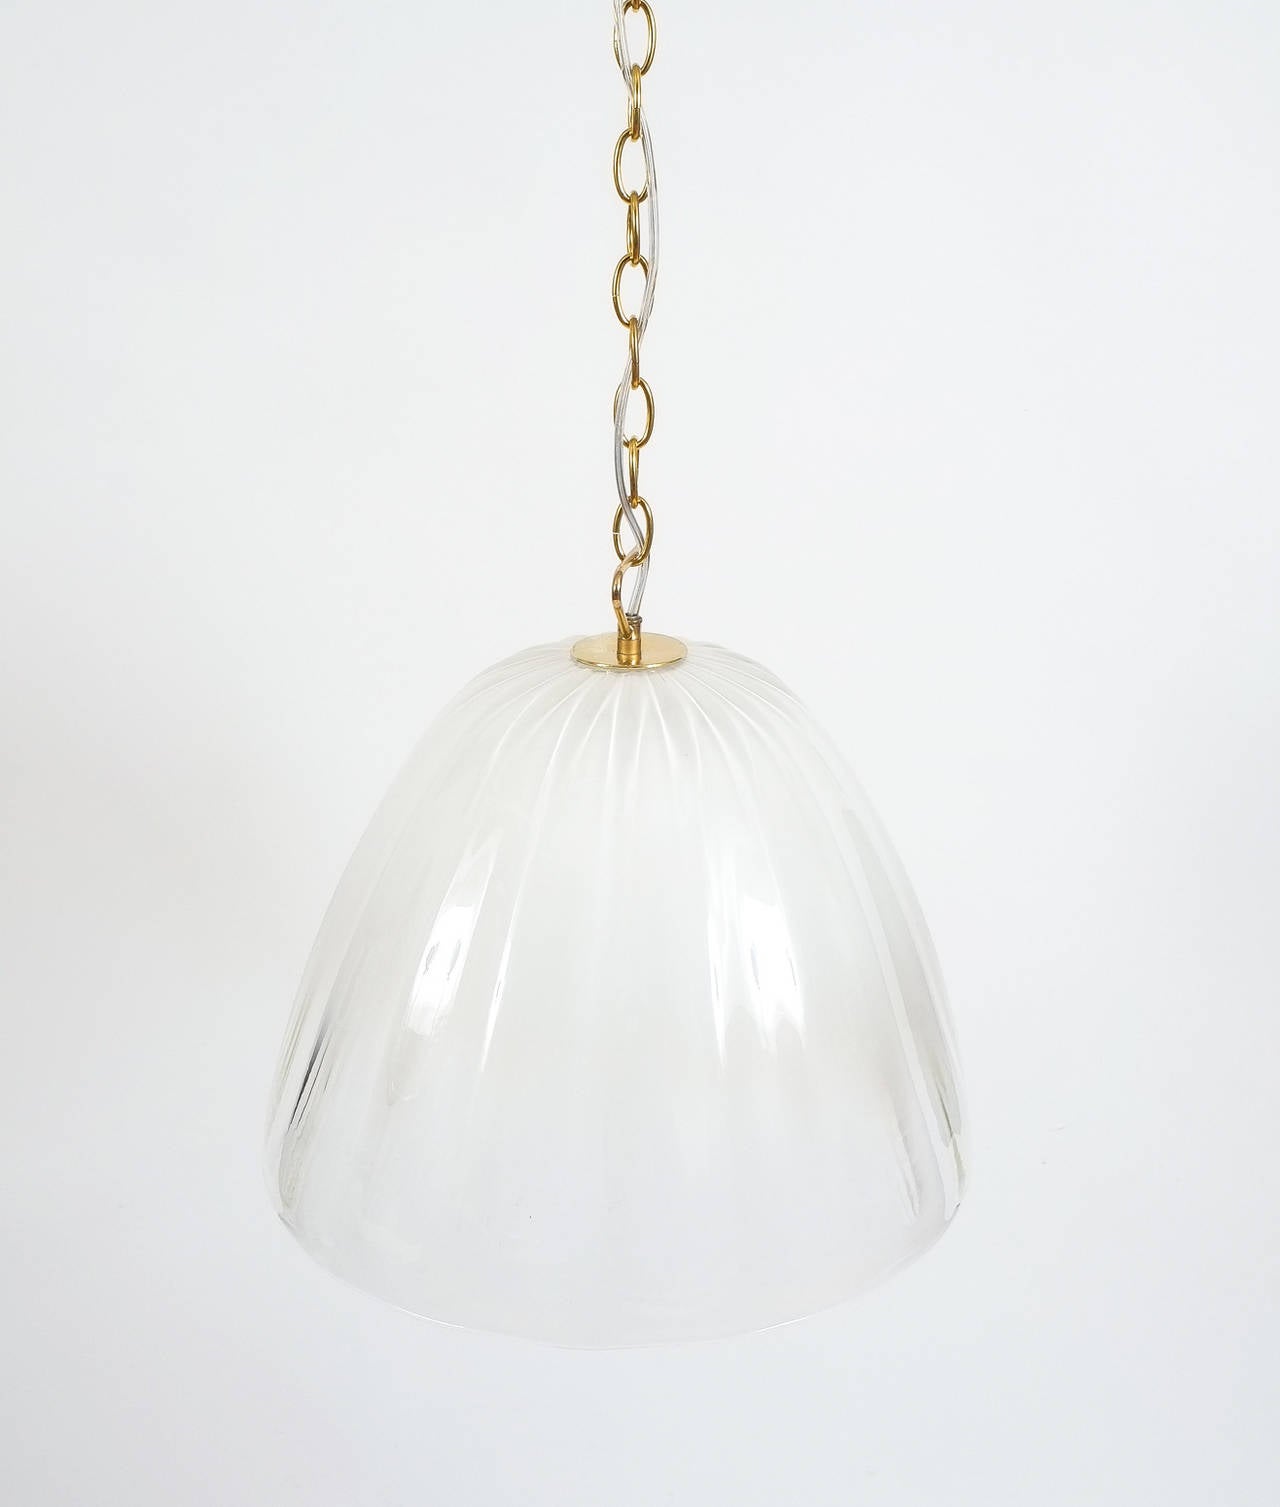 Austrian J.T. Kalmar Kiriglass Glass Pendant Lamp, Austria, 1960 For Sale